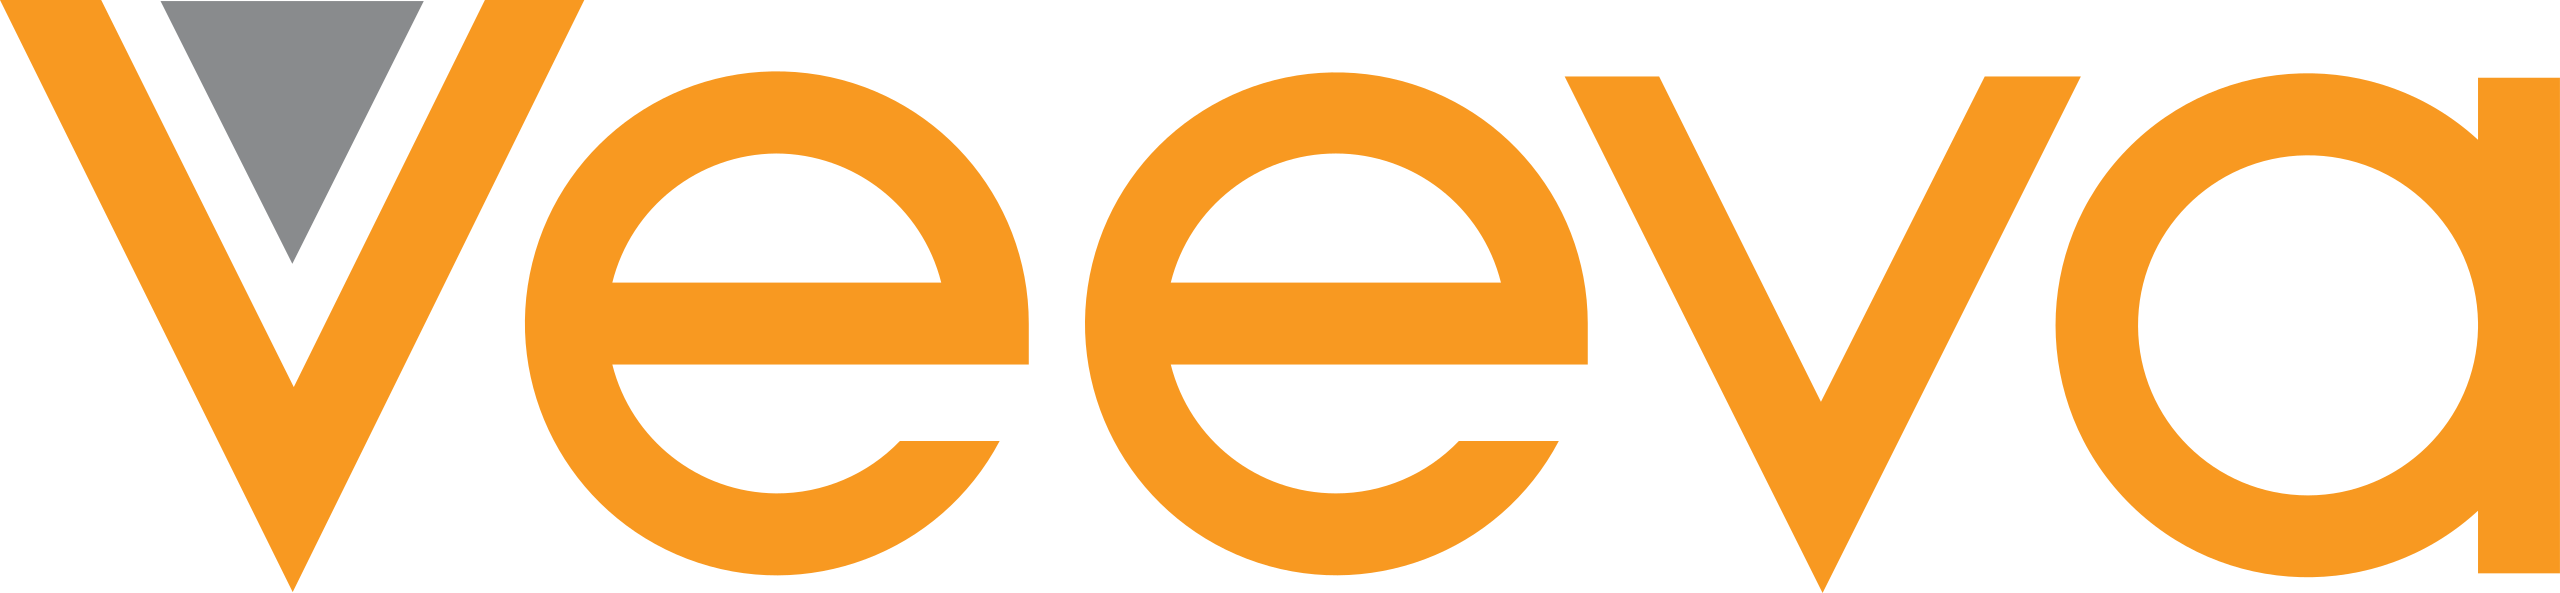 File:Veeva Systems Logo.svg - Wikimedia Commons